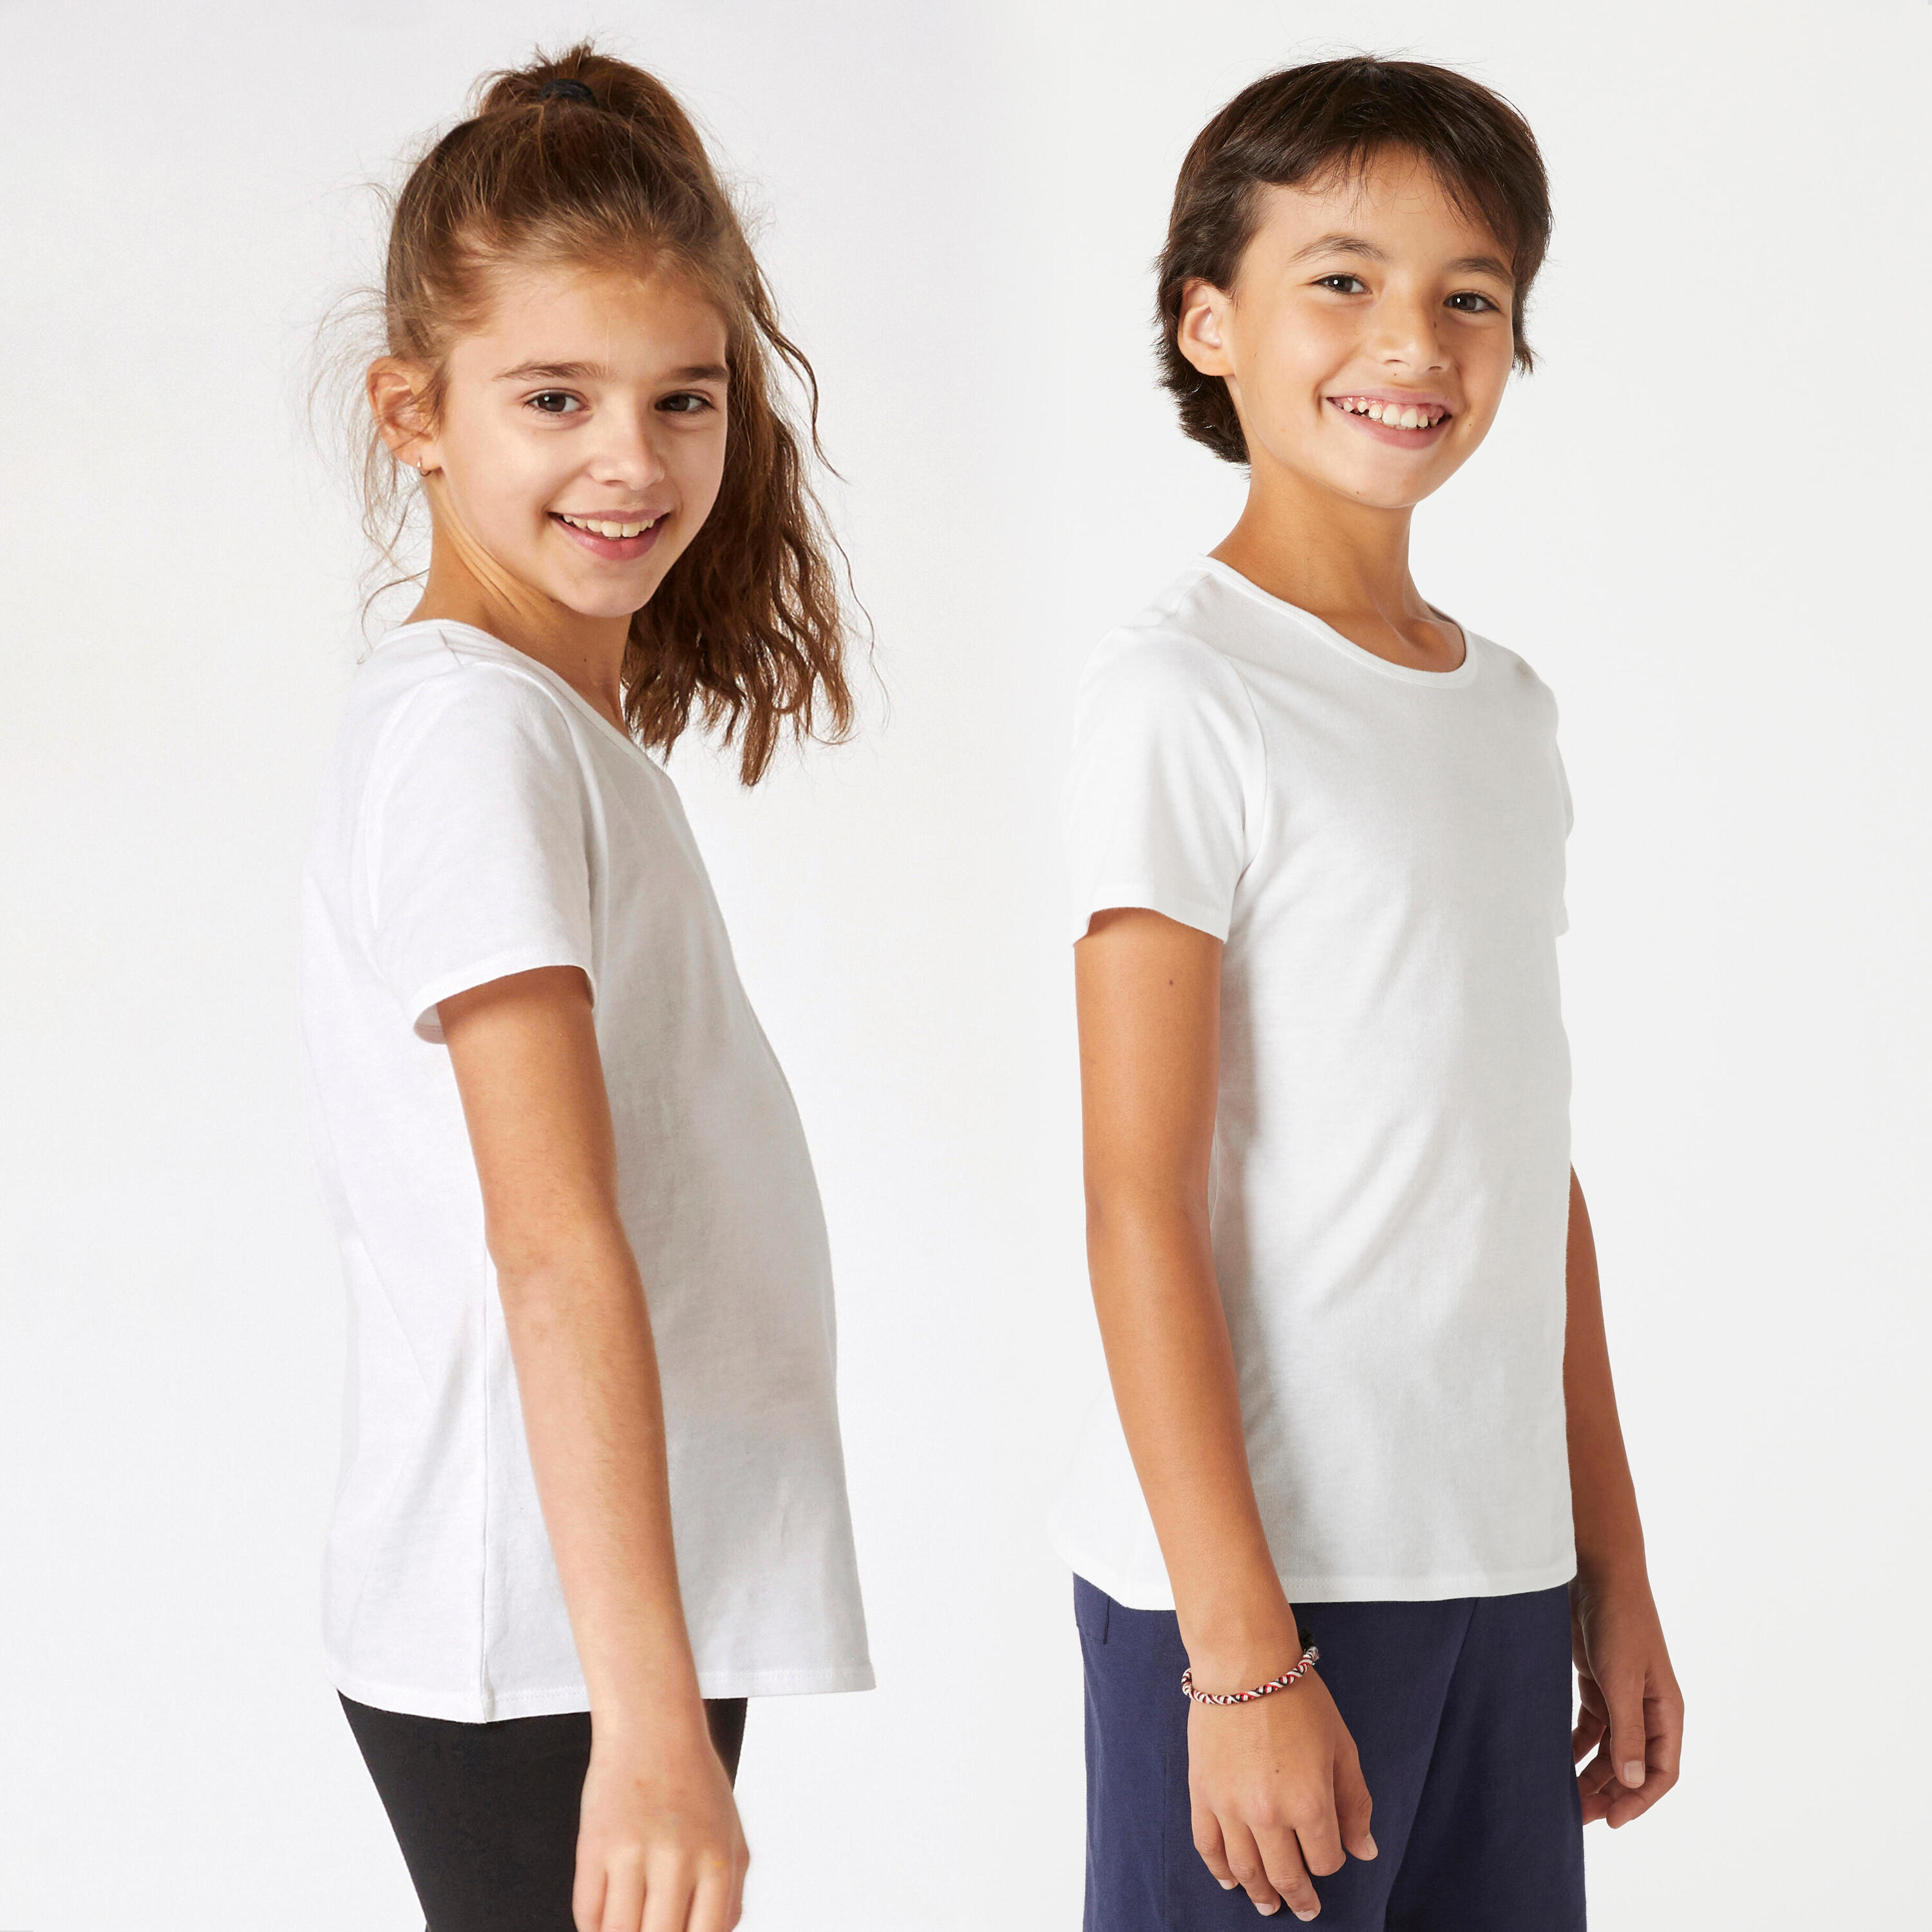 DOMYOS Kids' Unisex Cotton T-Shirt - White